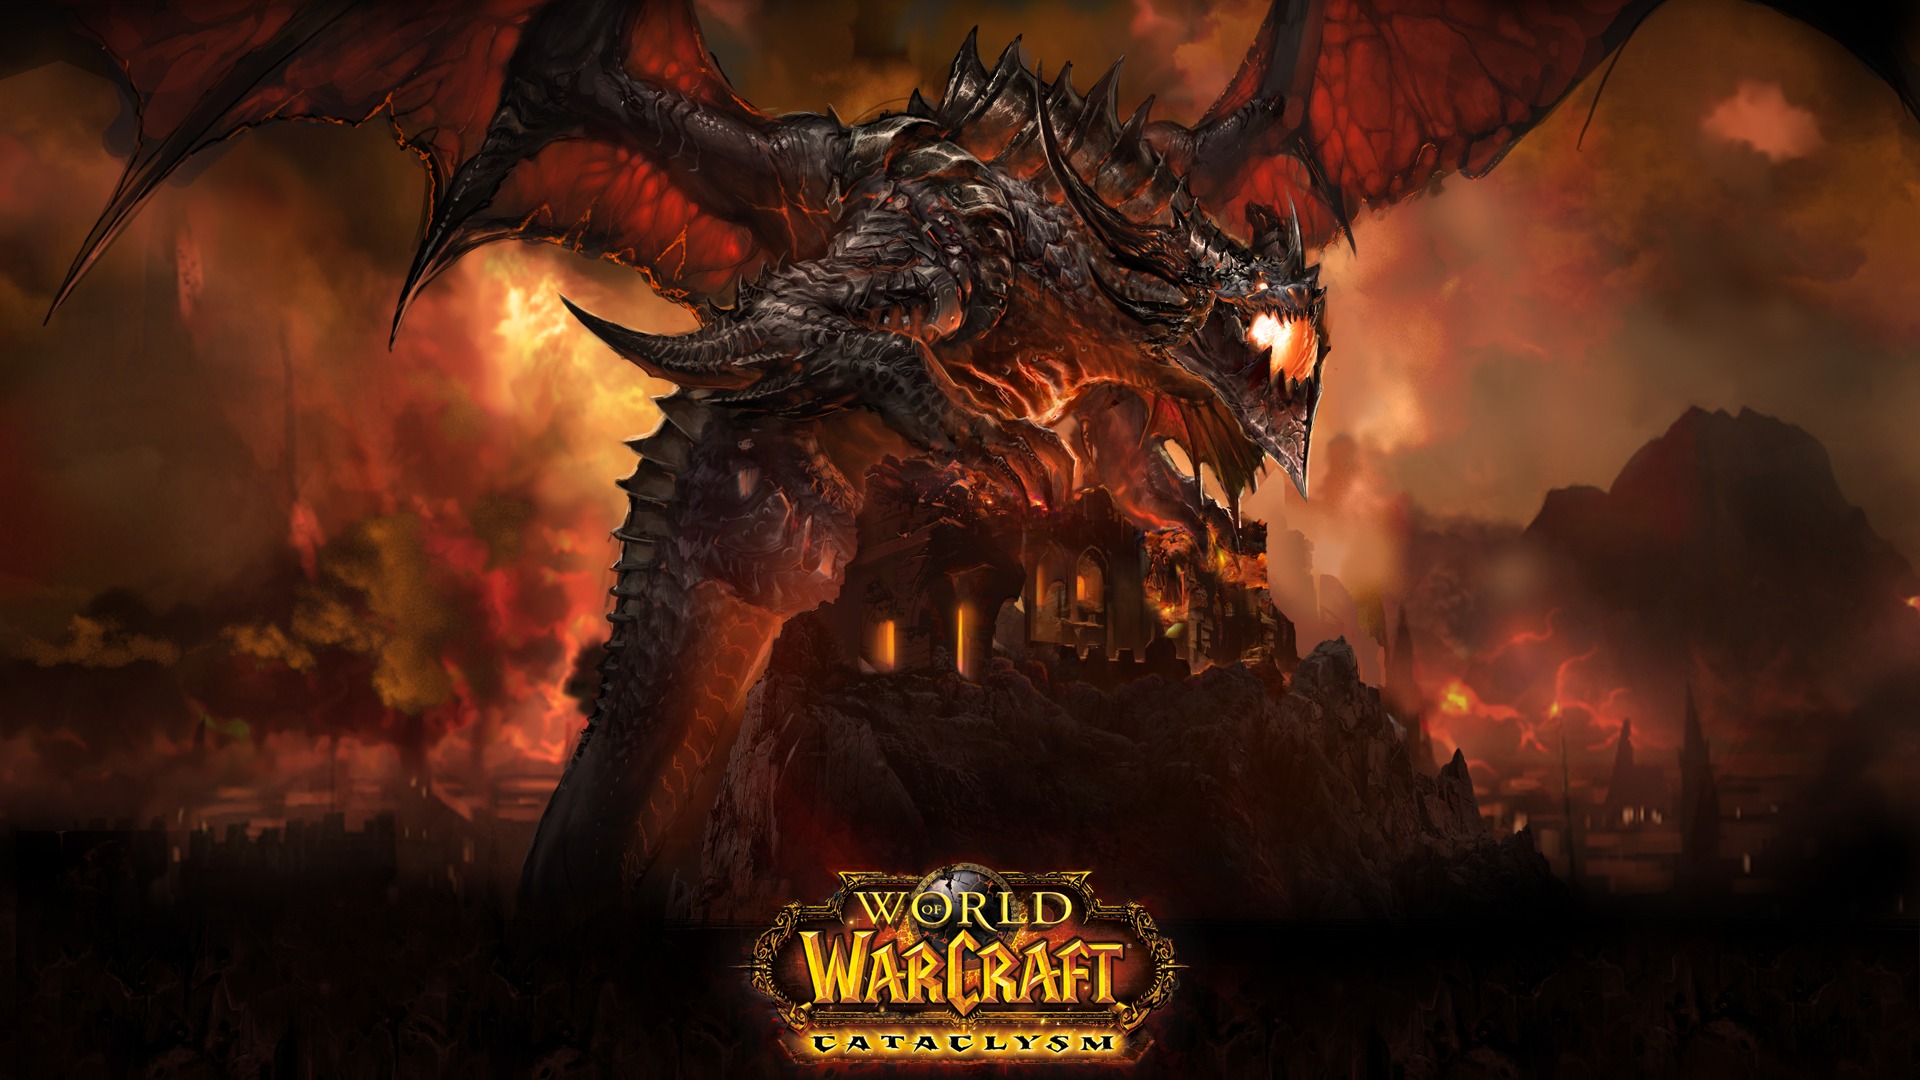 World of Warcraft 魔兽世界高清壁纸(二)7 - 1920x1080